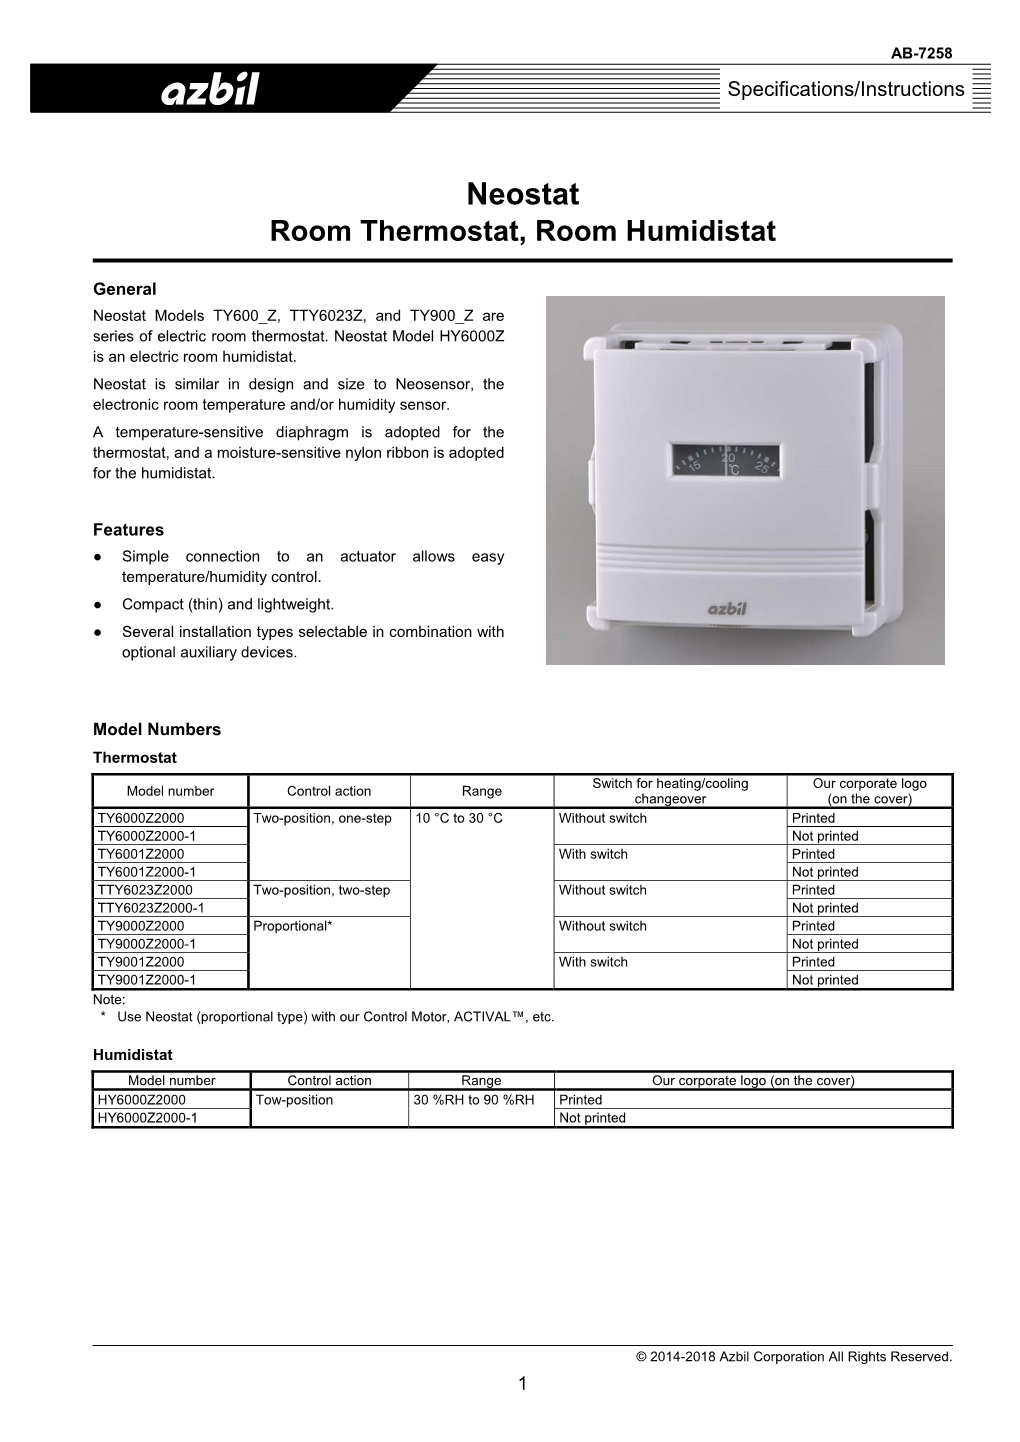 Neostat Room Thermostat, Room Humidistat Specifications/Instructions